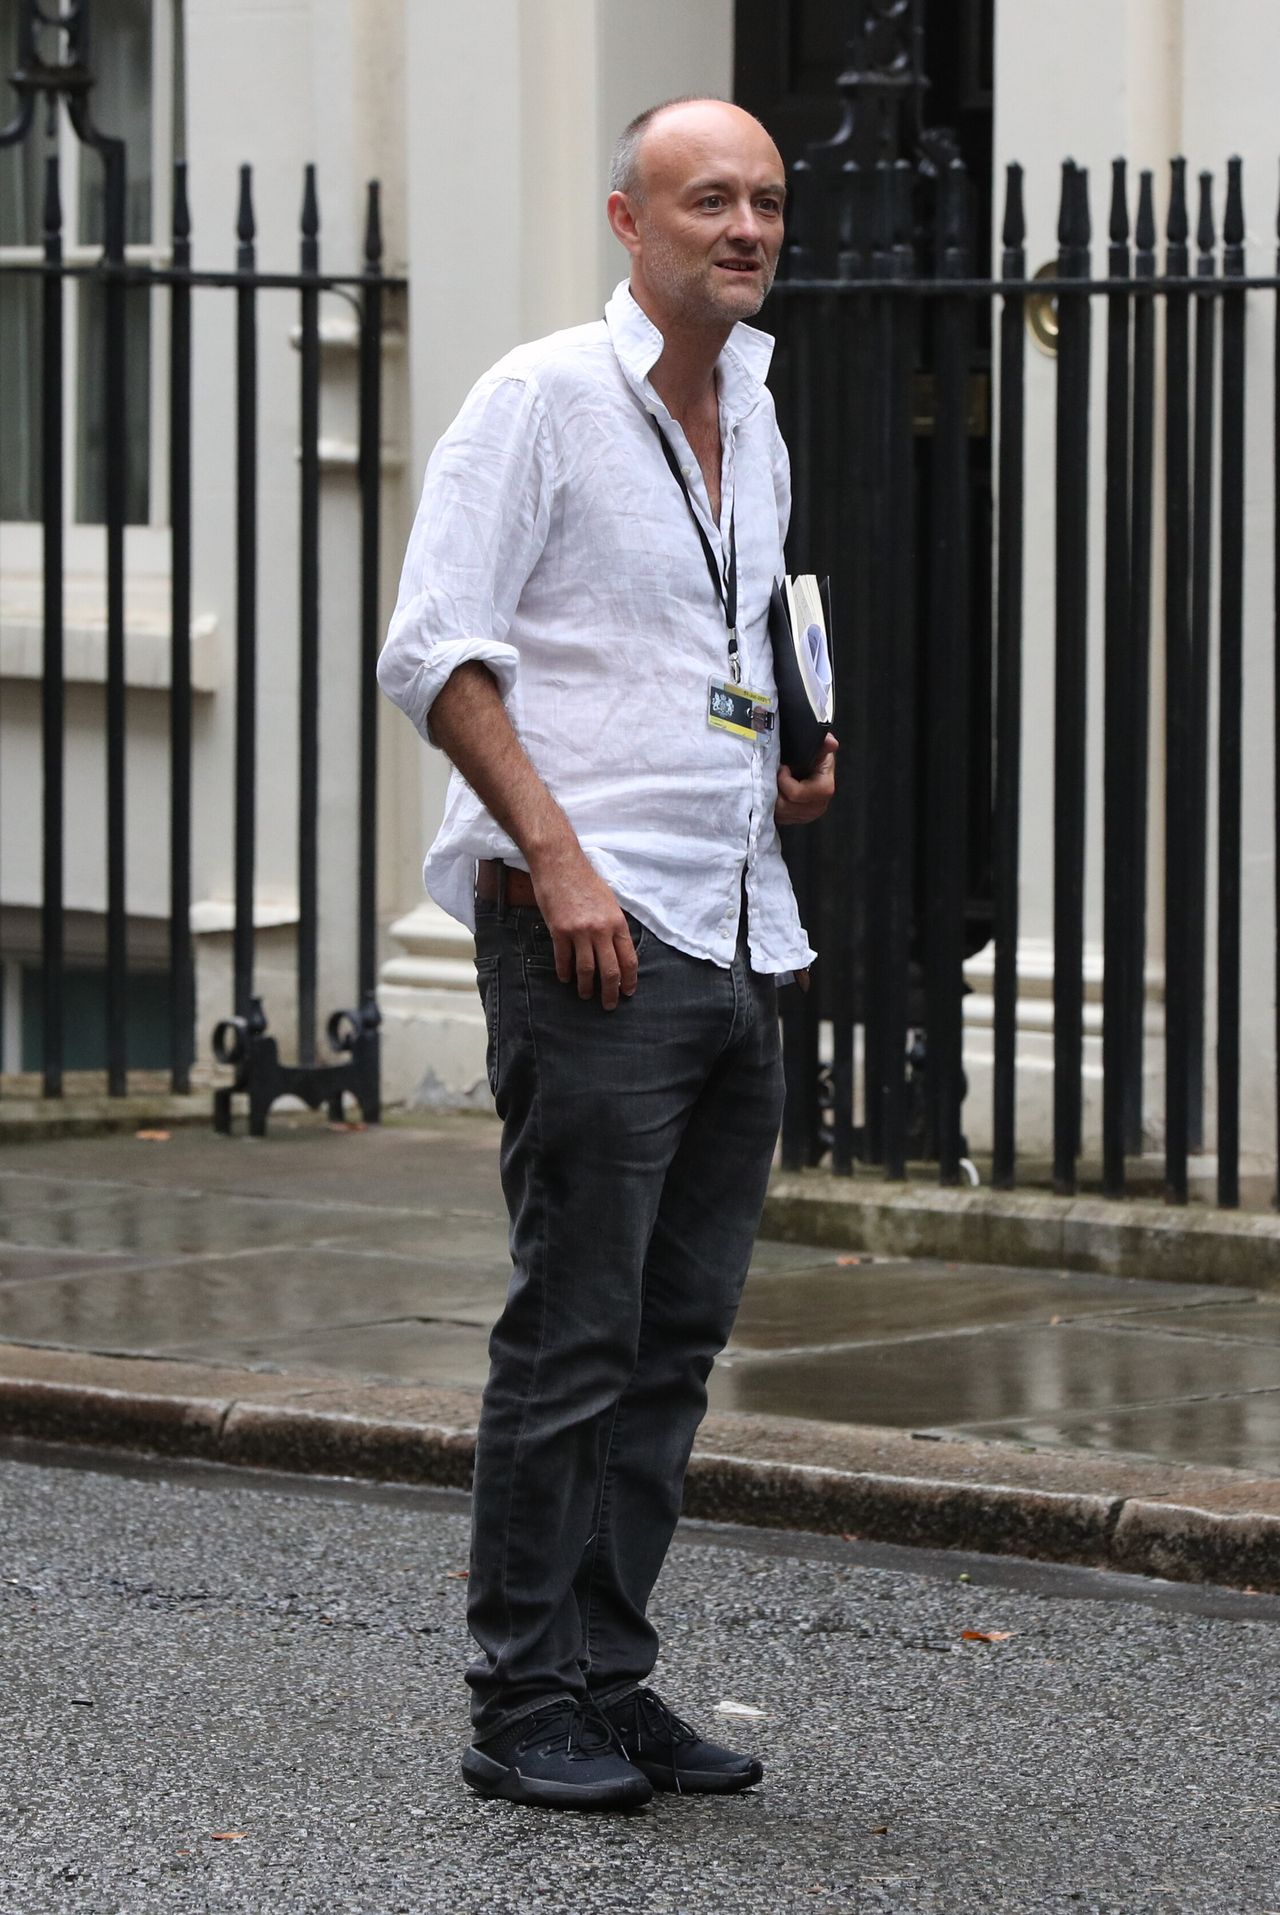 Dominic Cummings in Downing Street, London.